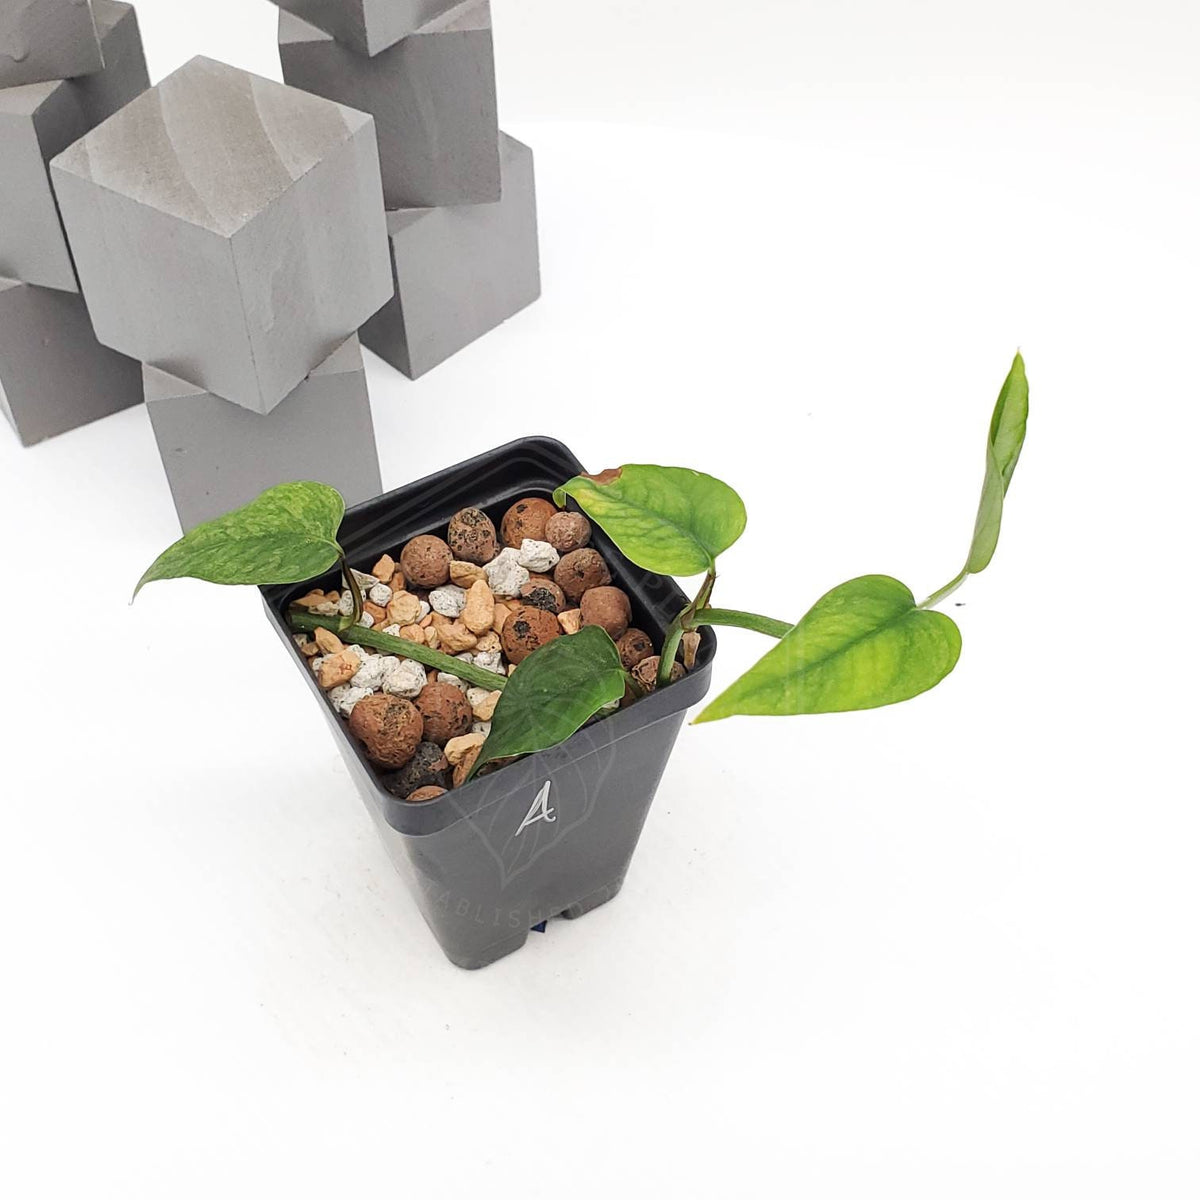 Epipremnum Pinnatum Mint - Rare - Jiffy Plants